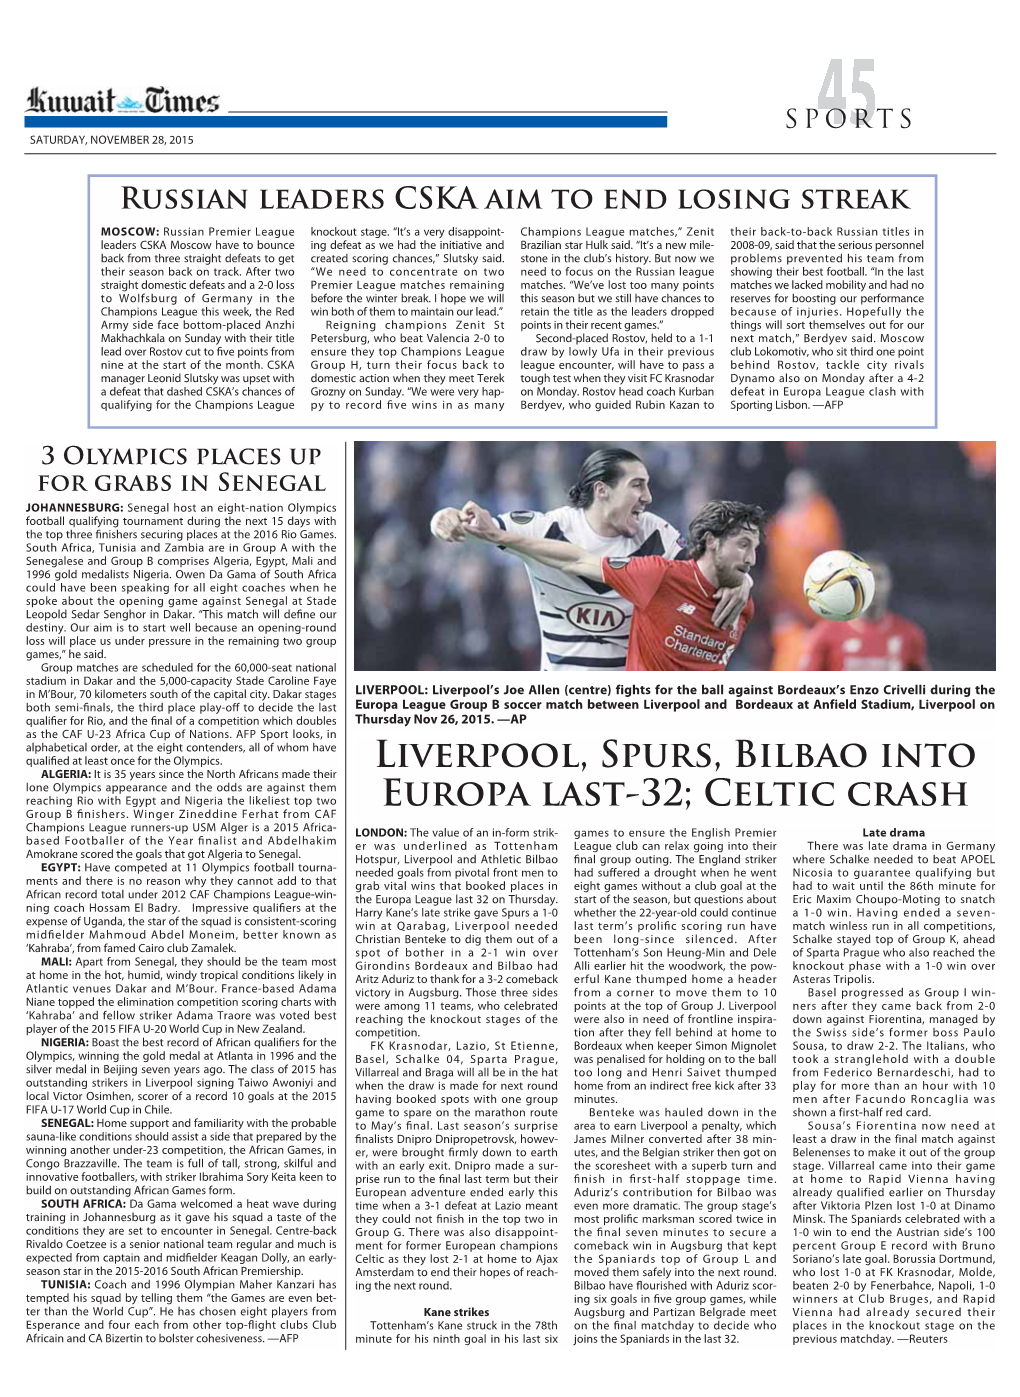 Liverpool, Spurs, Bilbao Into Europa Last-32; Celtic Crash